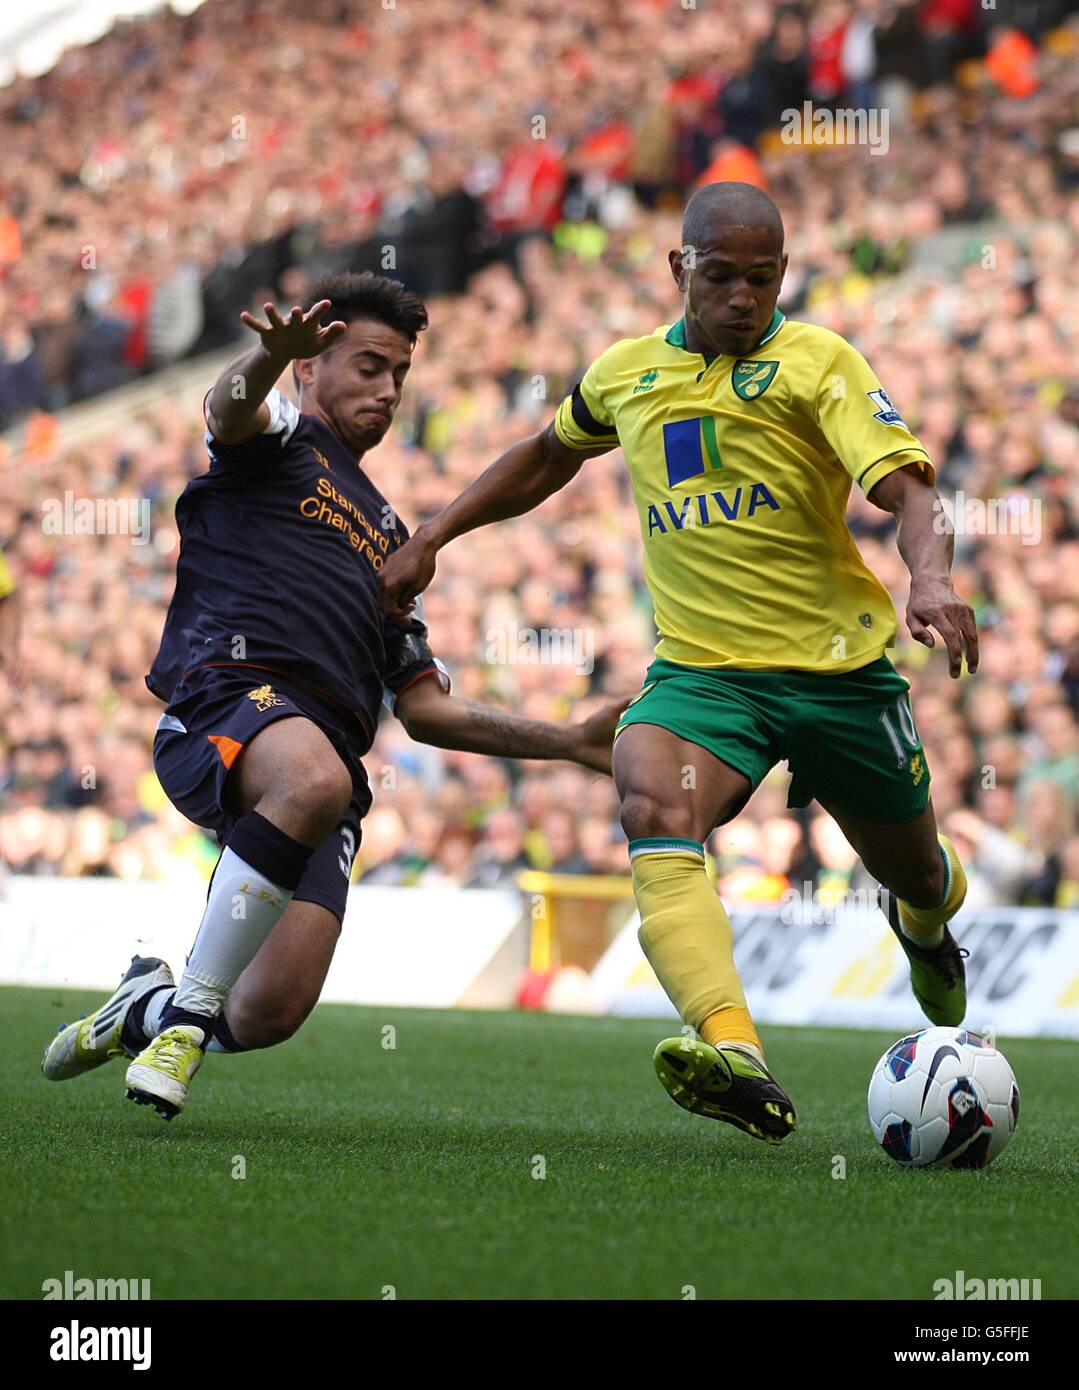 Soccer - Barclays Premier League - Norwich City v Liverpool - Carrow Road. Liverpool's Jesus Fernandez Saez (left) slides in on Norwich City's Simeon Jackson (right) Stock Photo